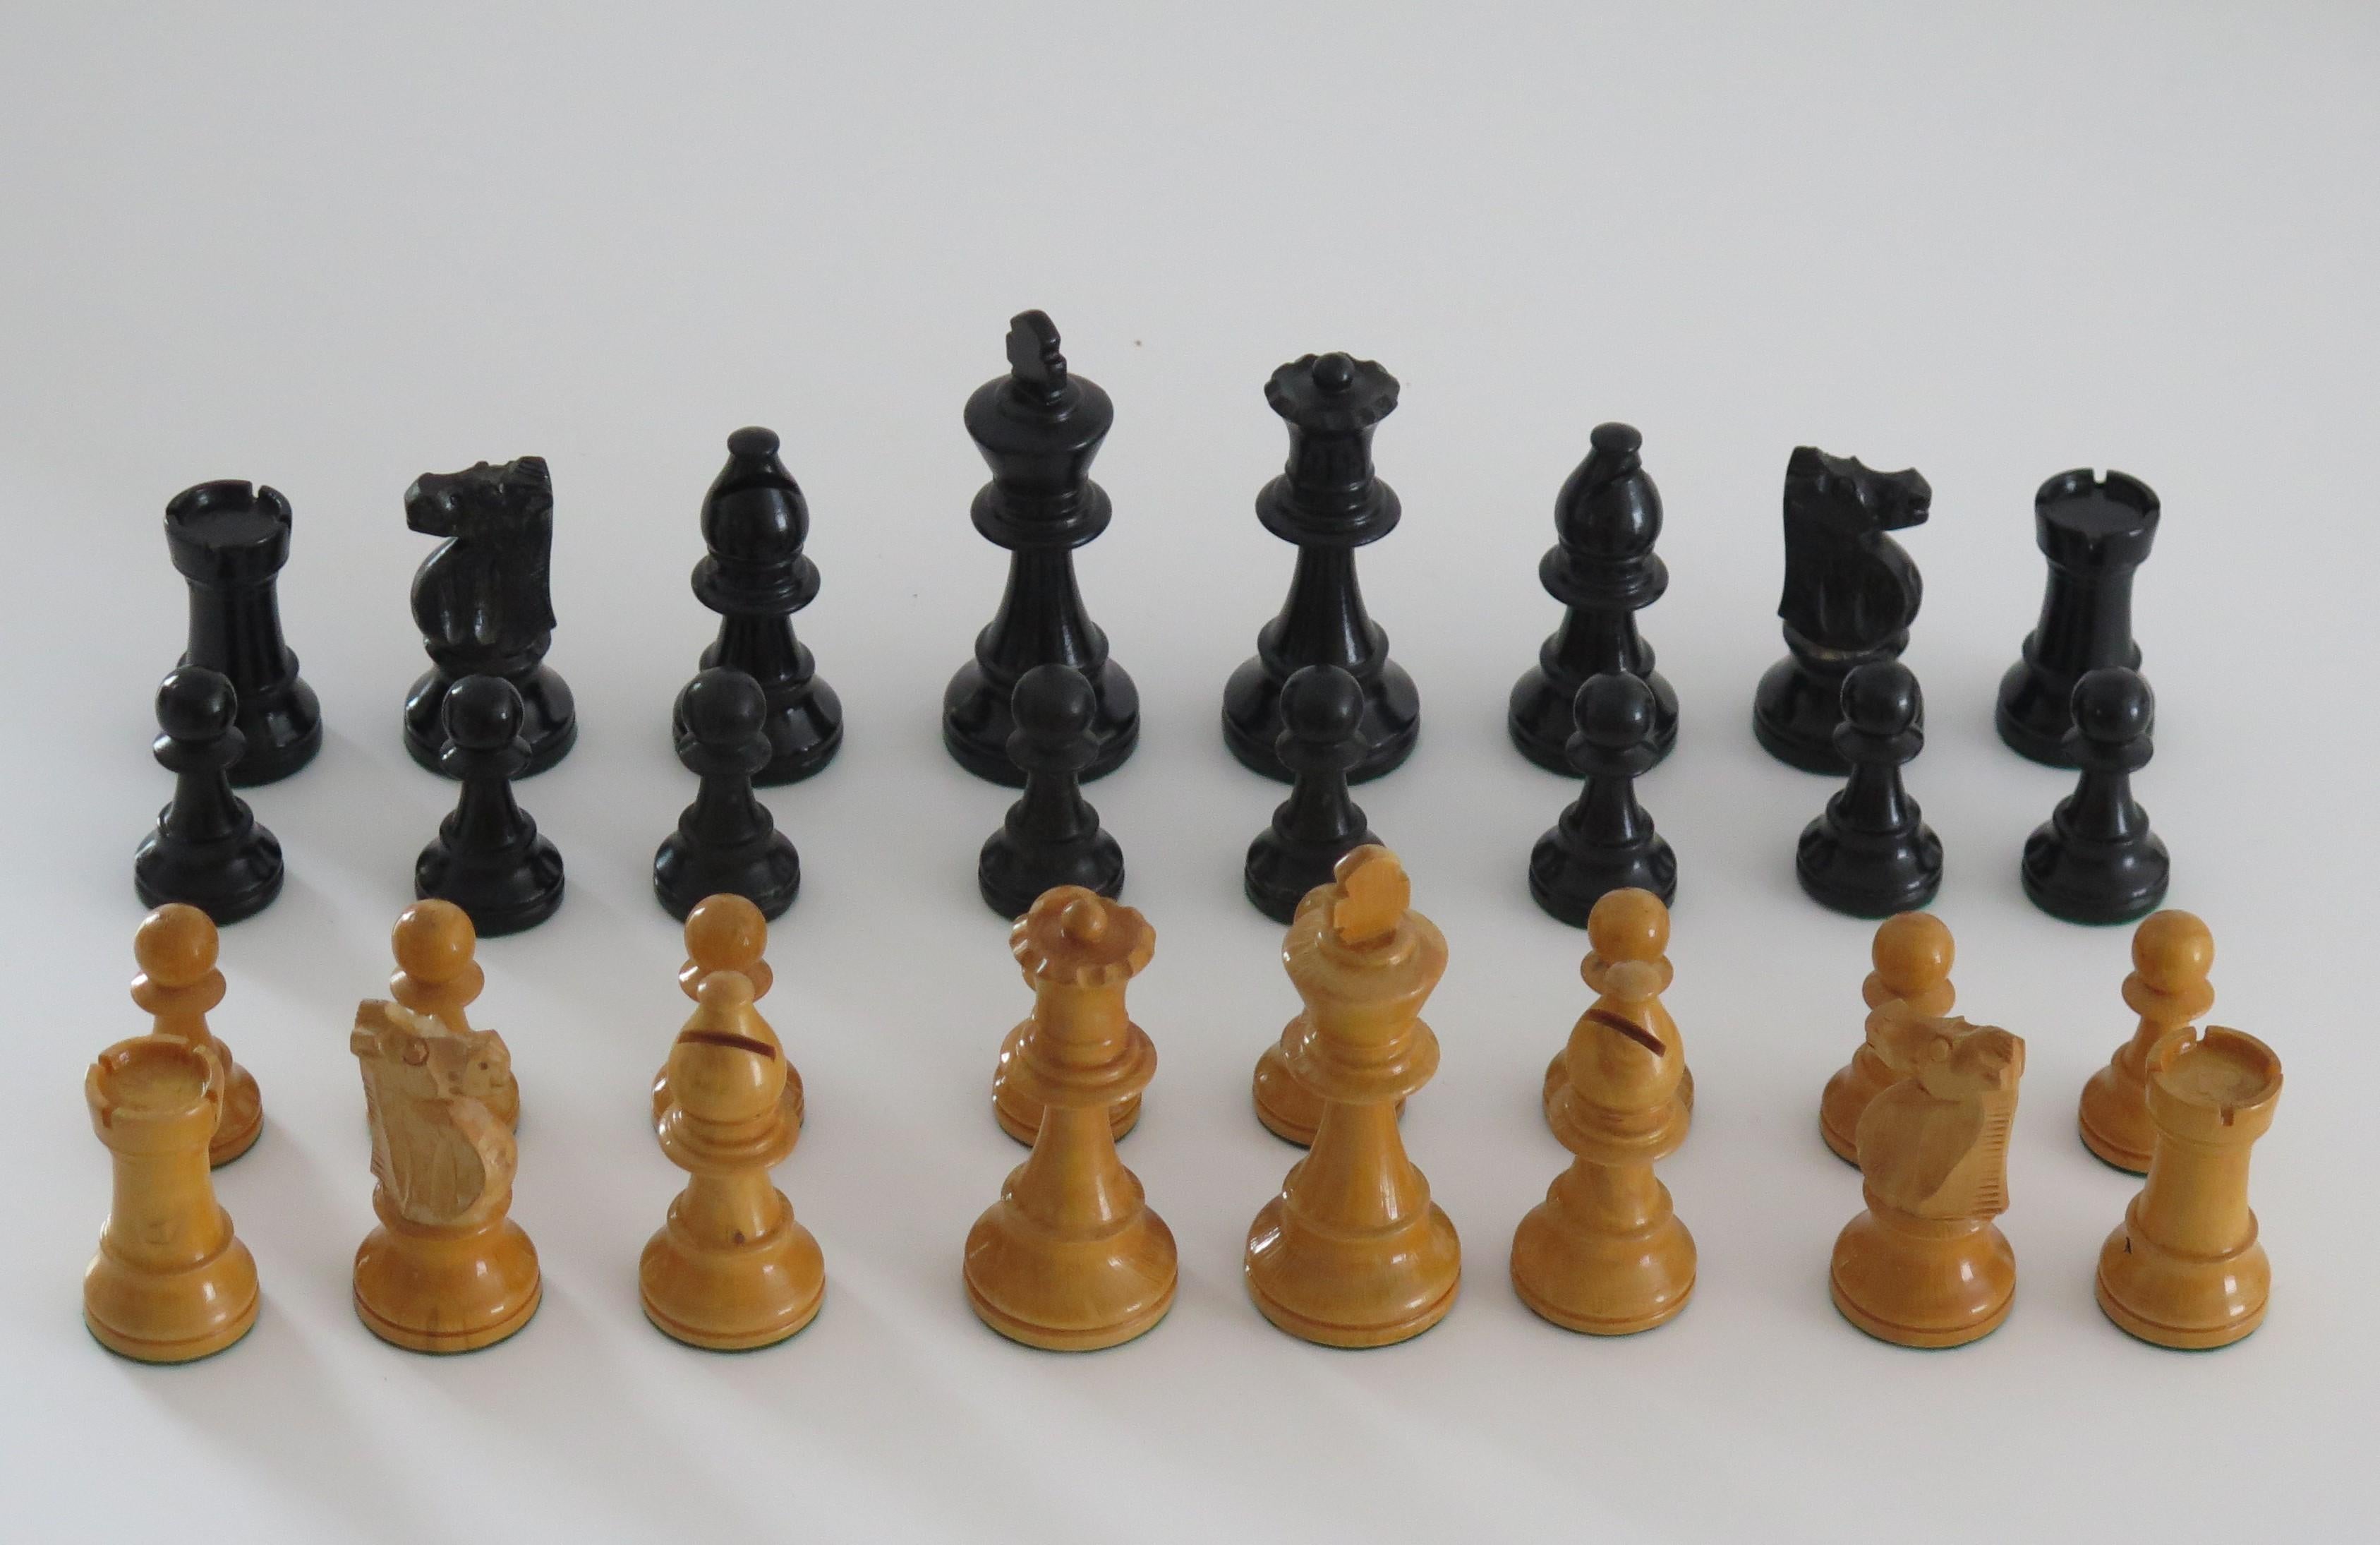 taxidermy chess set